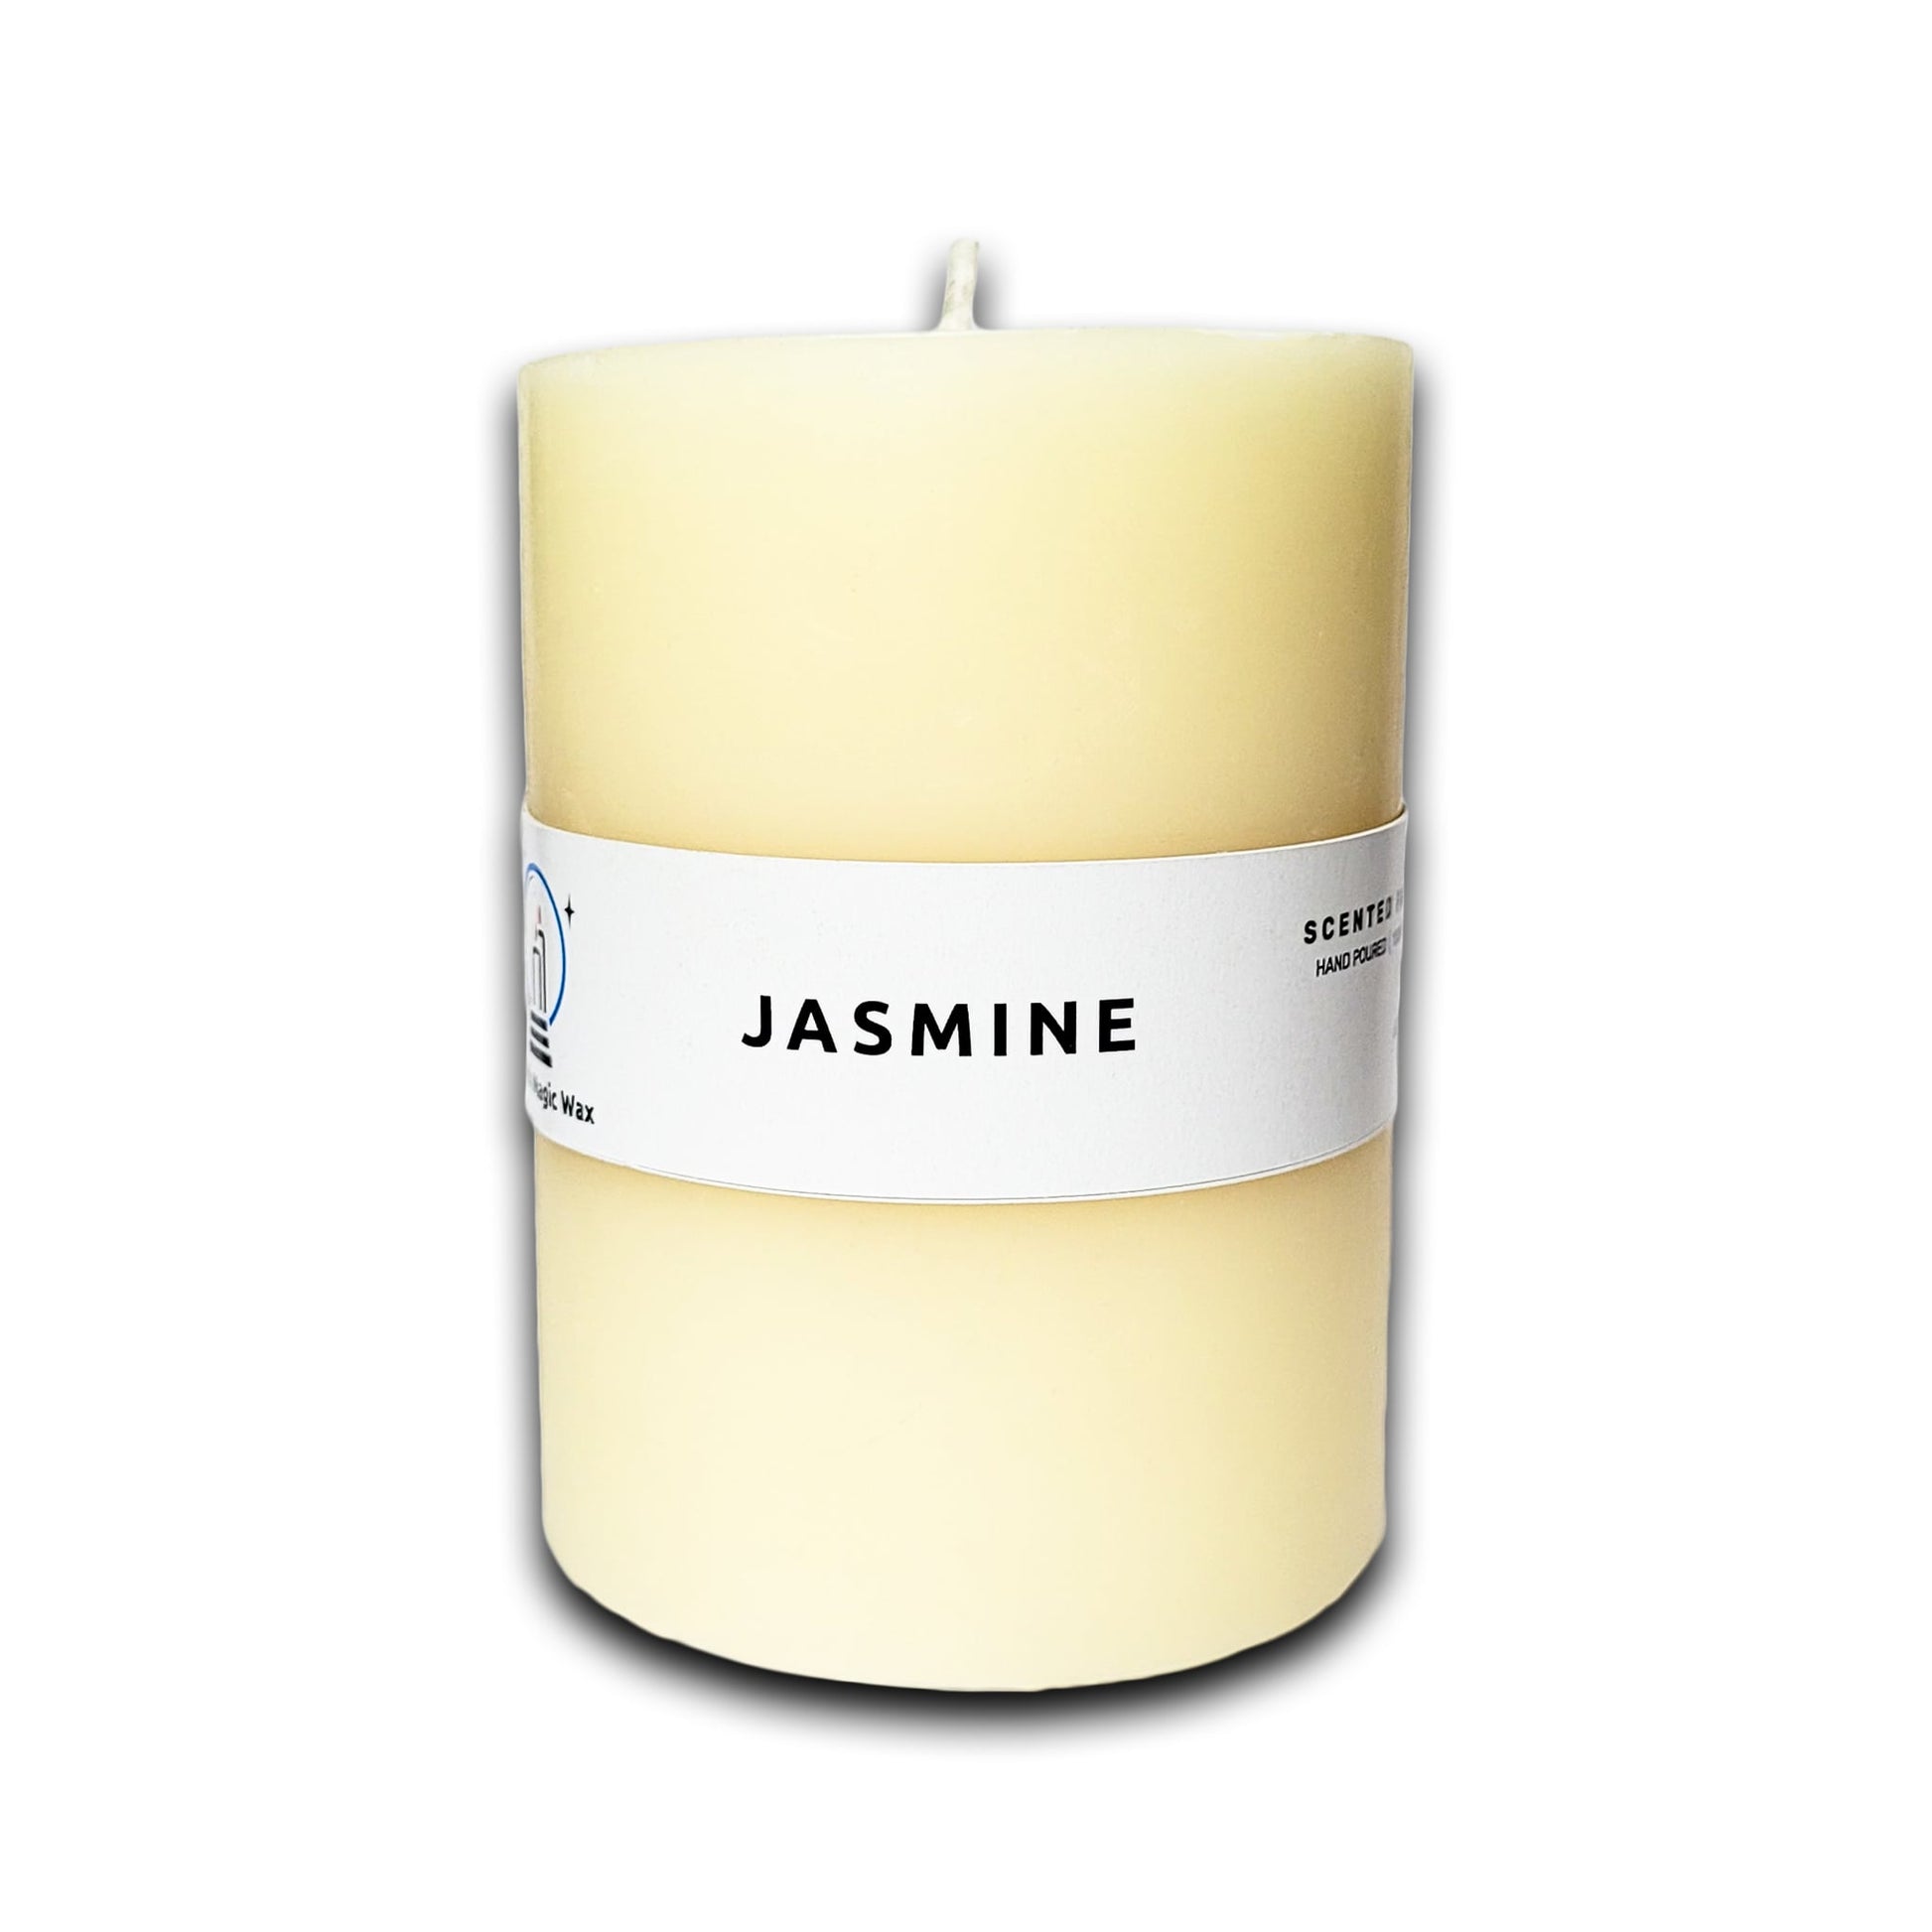 Jasmine scented candles, Jasmine pillar candle